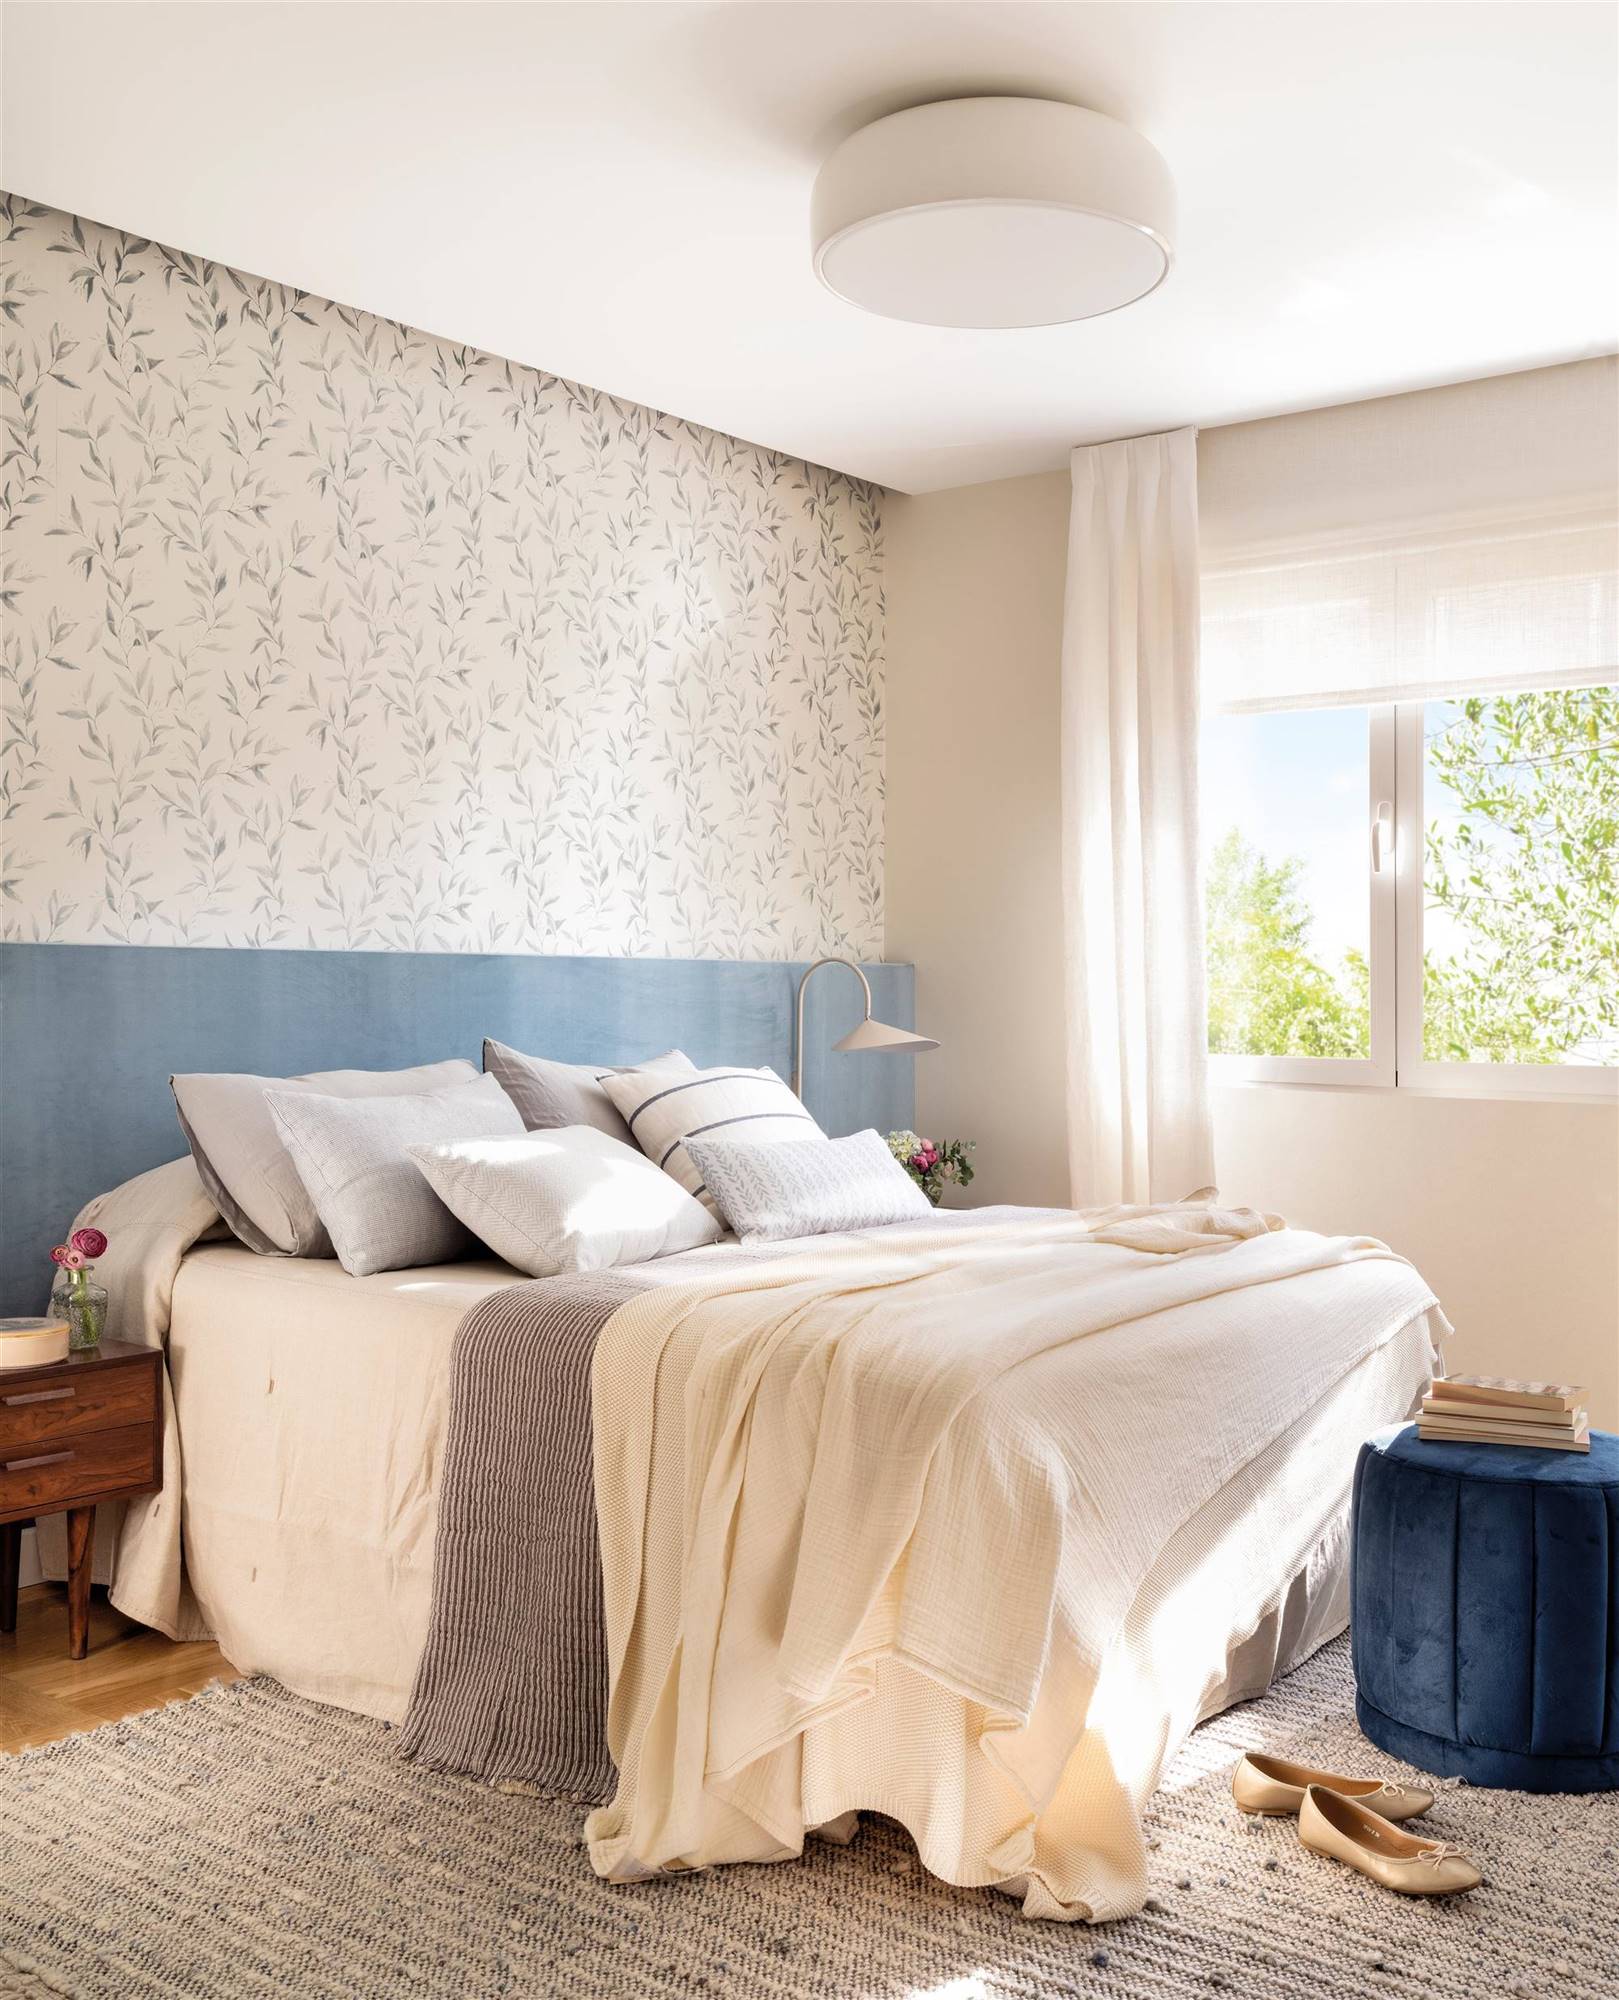 Dormitorio con cabecero de lino azul de pared a pared, revestida de papel pintado.